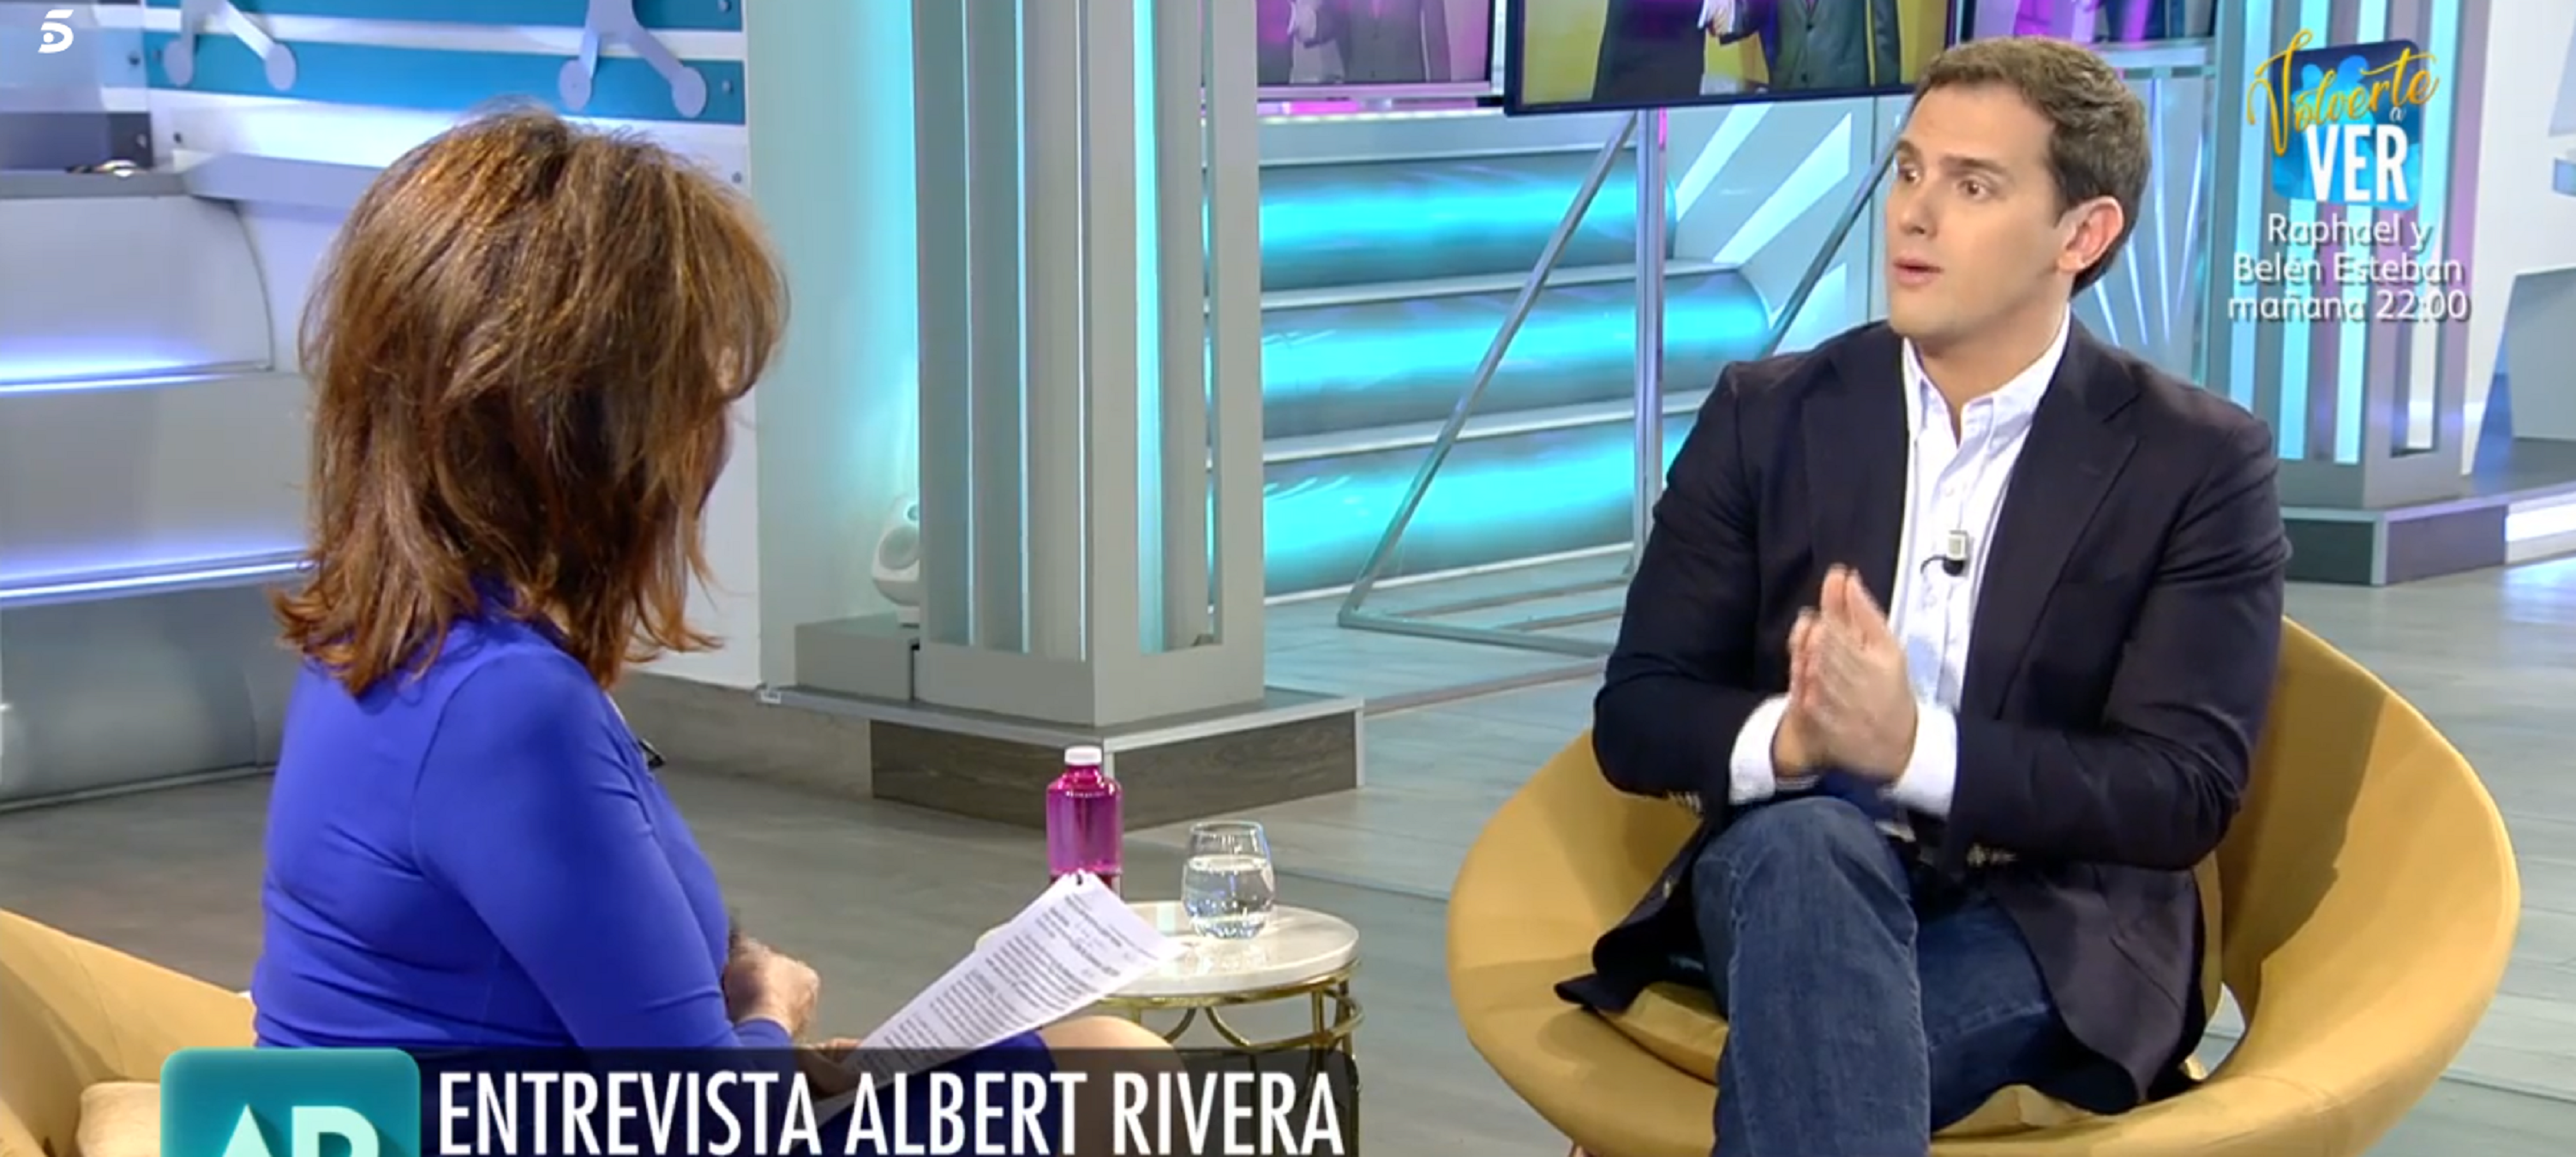 Ana Rosa levita amb Albert Rivera: "A mí, como catalán, me duele todo esto"